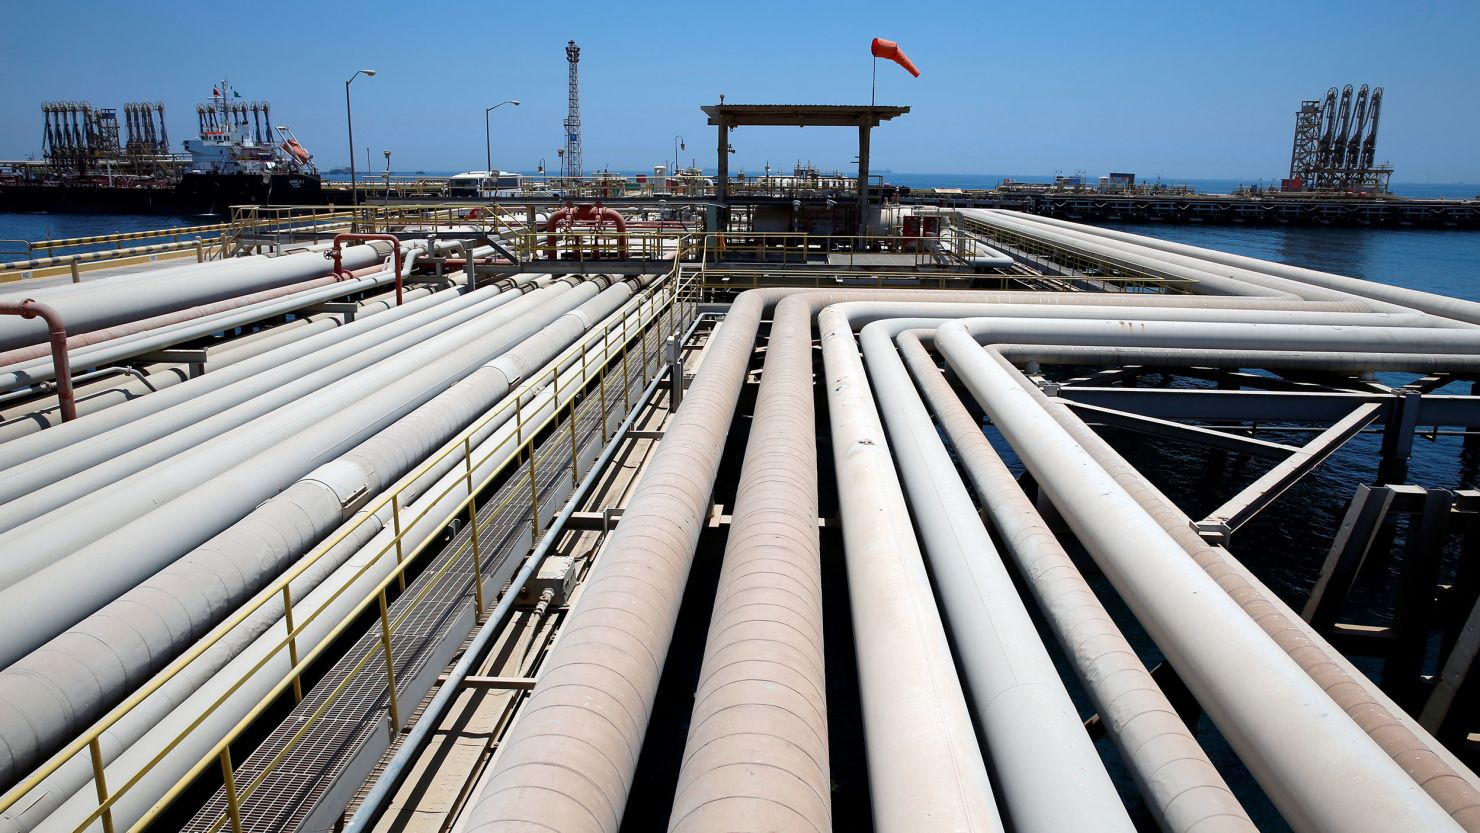 An oil tanker is being loaded at Saudi Aramco's Ras Tanura oil refinery in Saudi Arabia in May 2018.